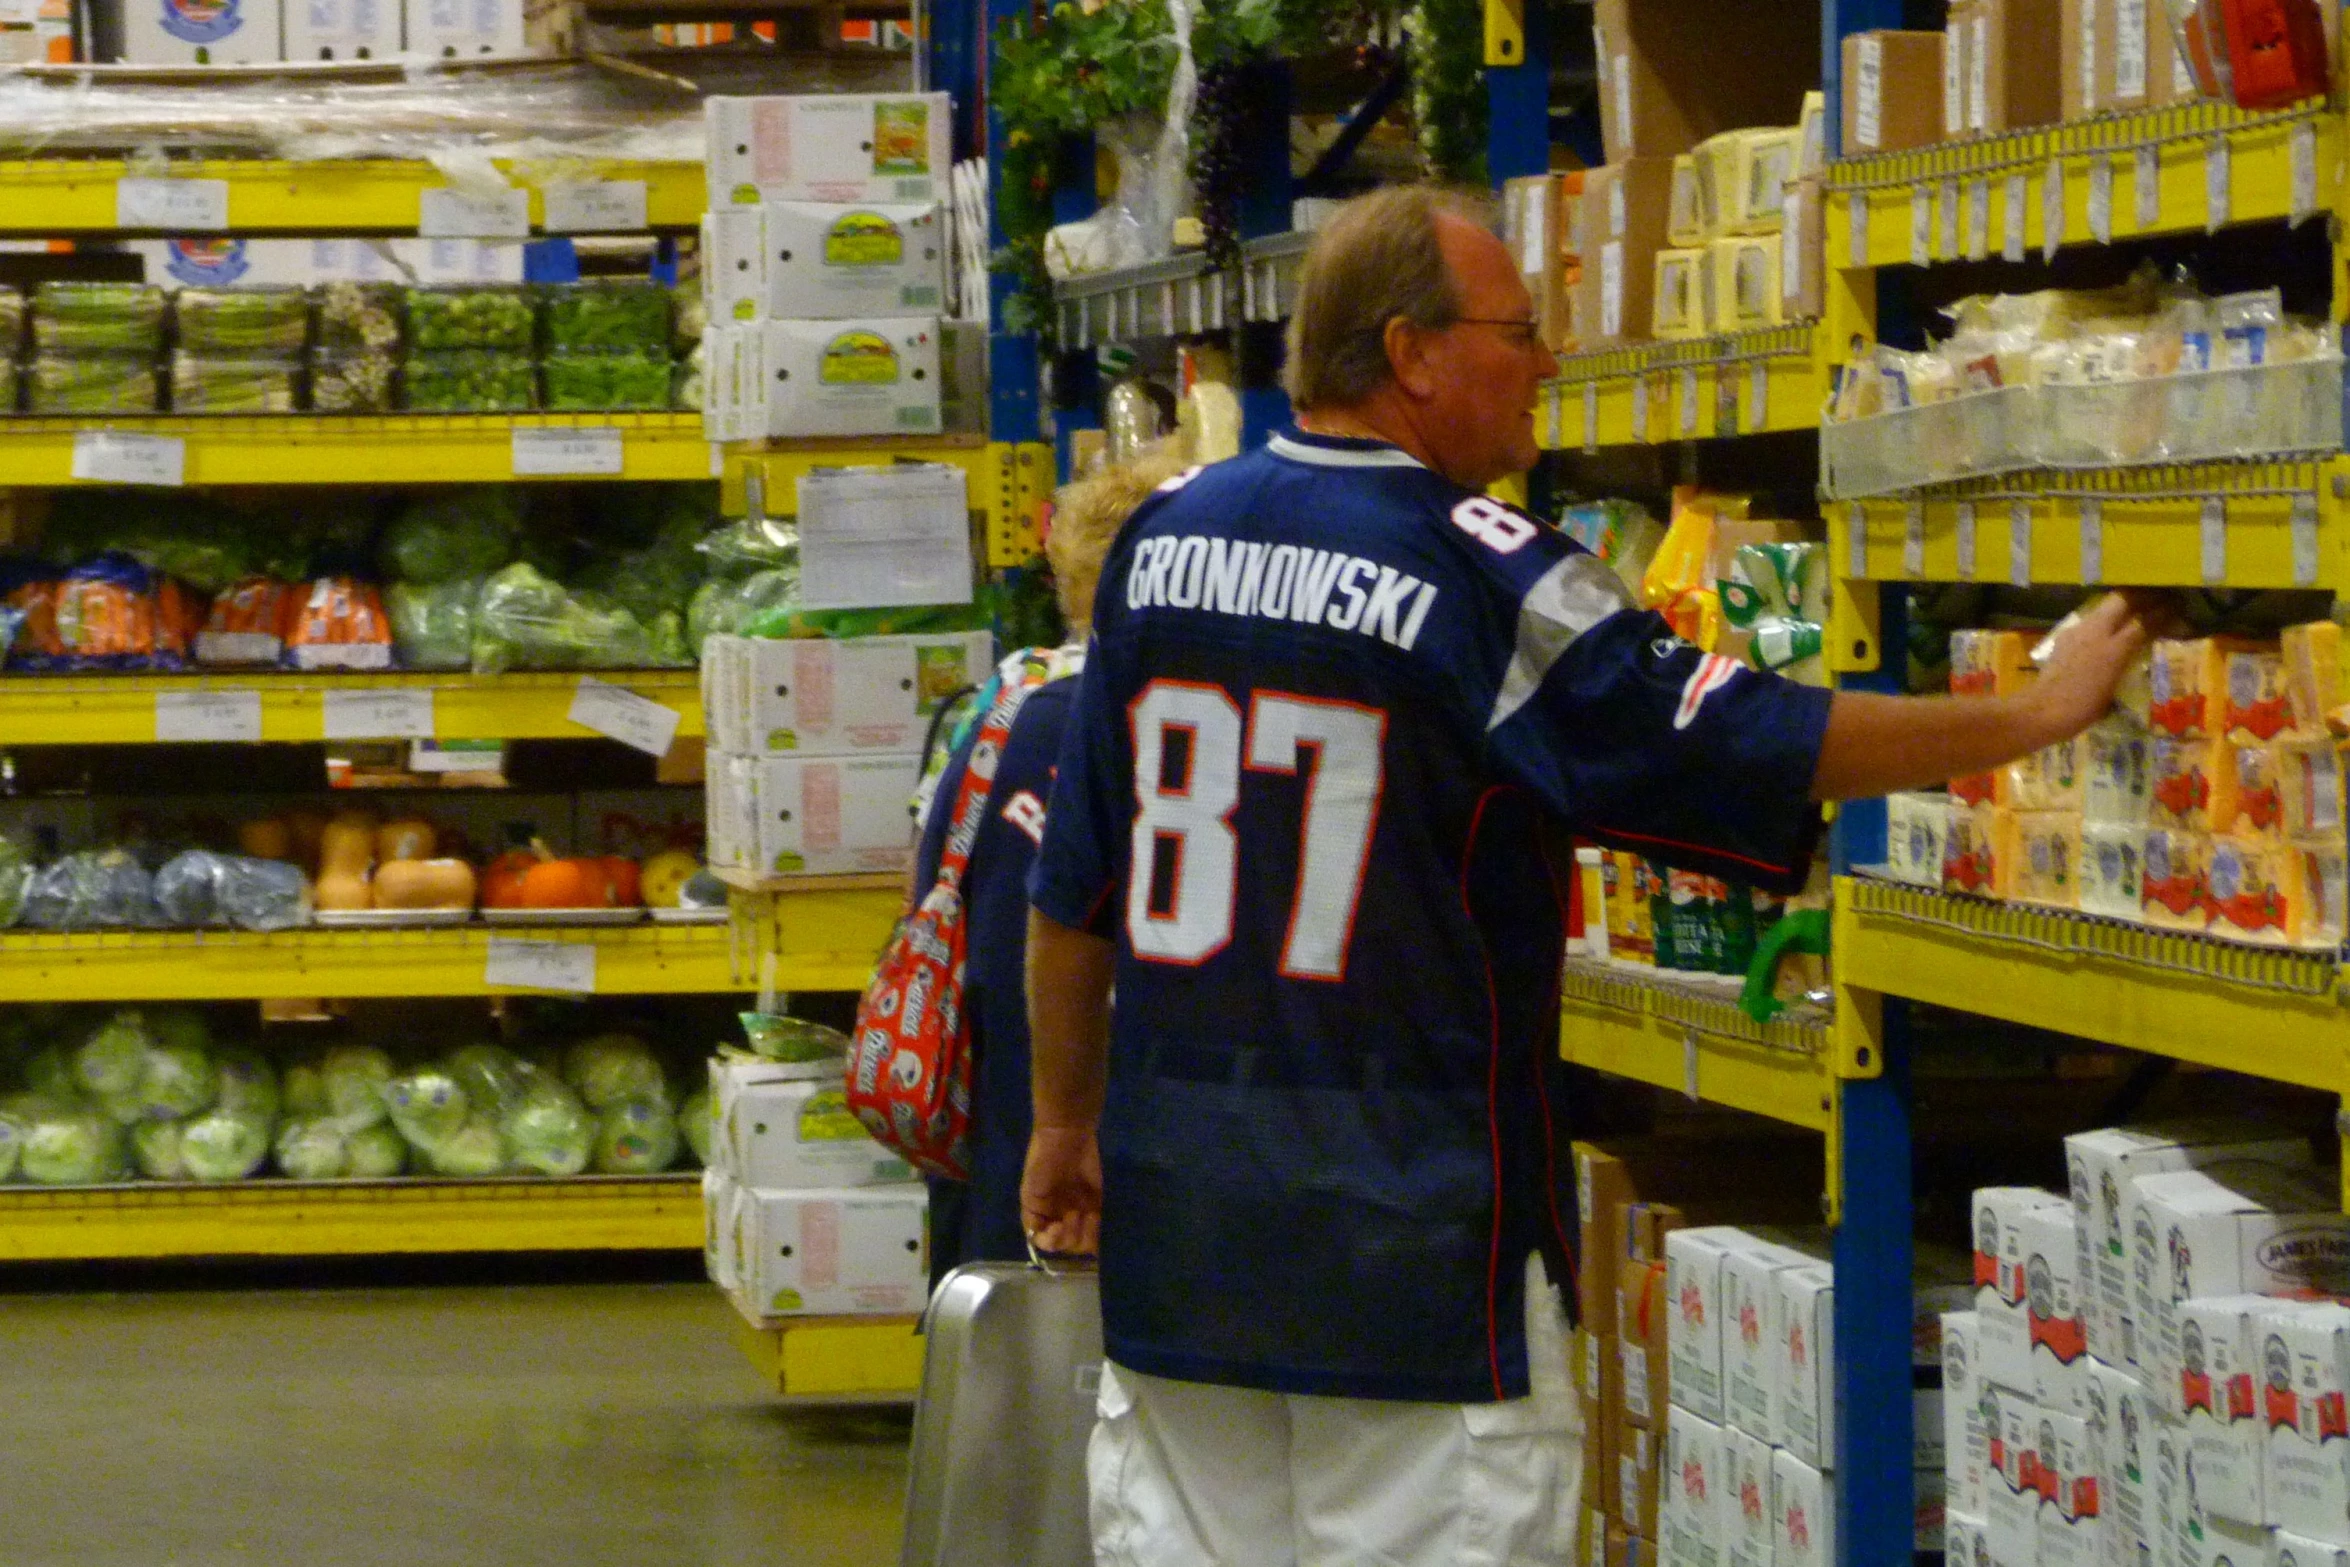 a man wearing a jersey walks along the aisles in a supermarket